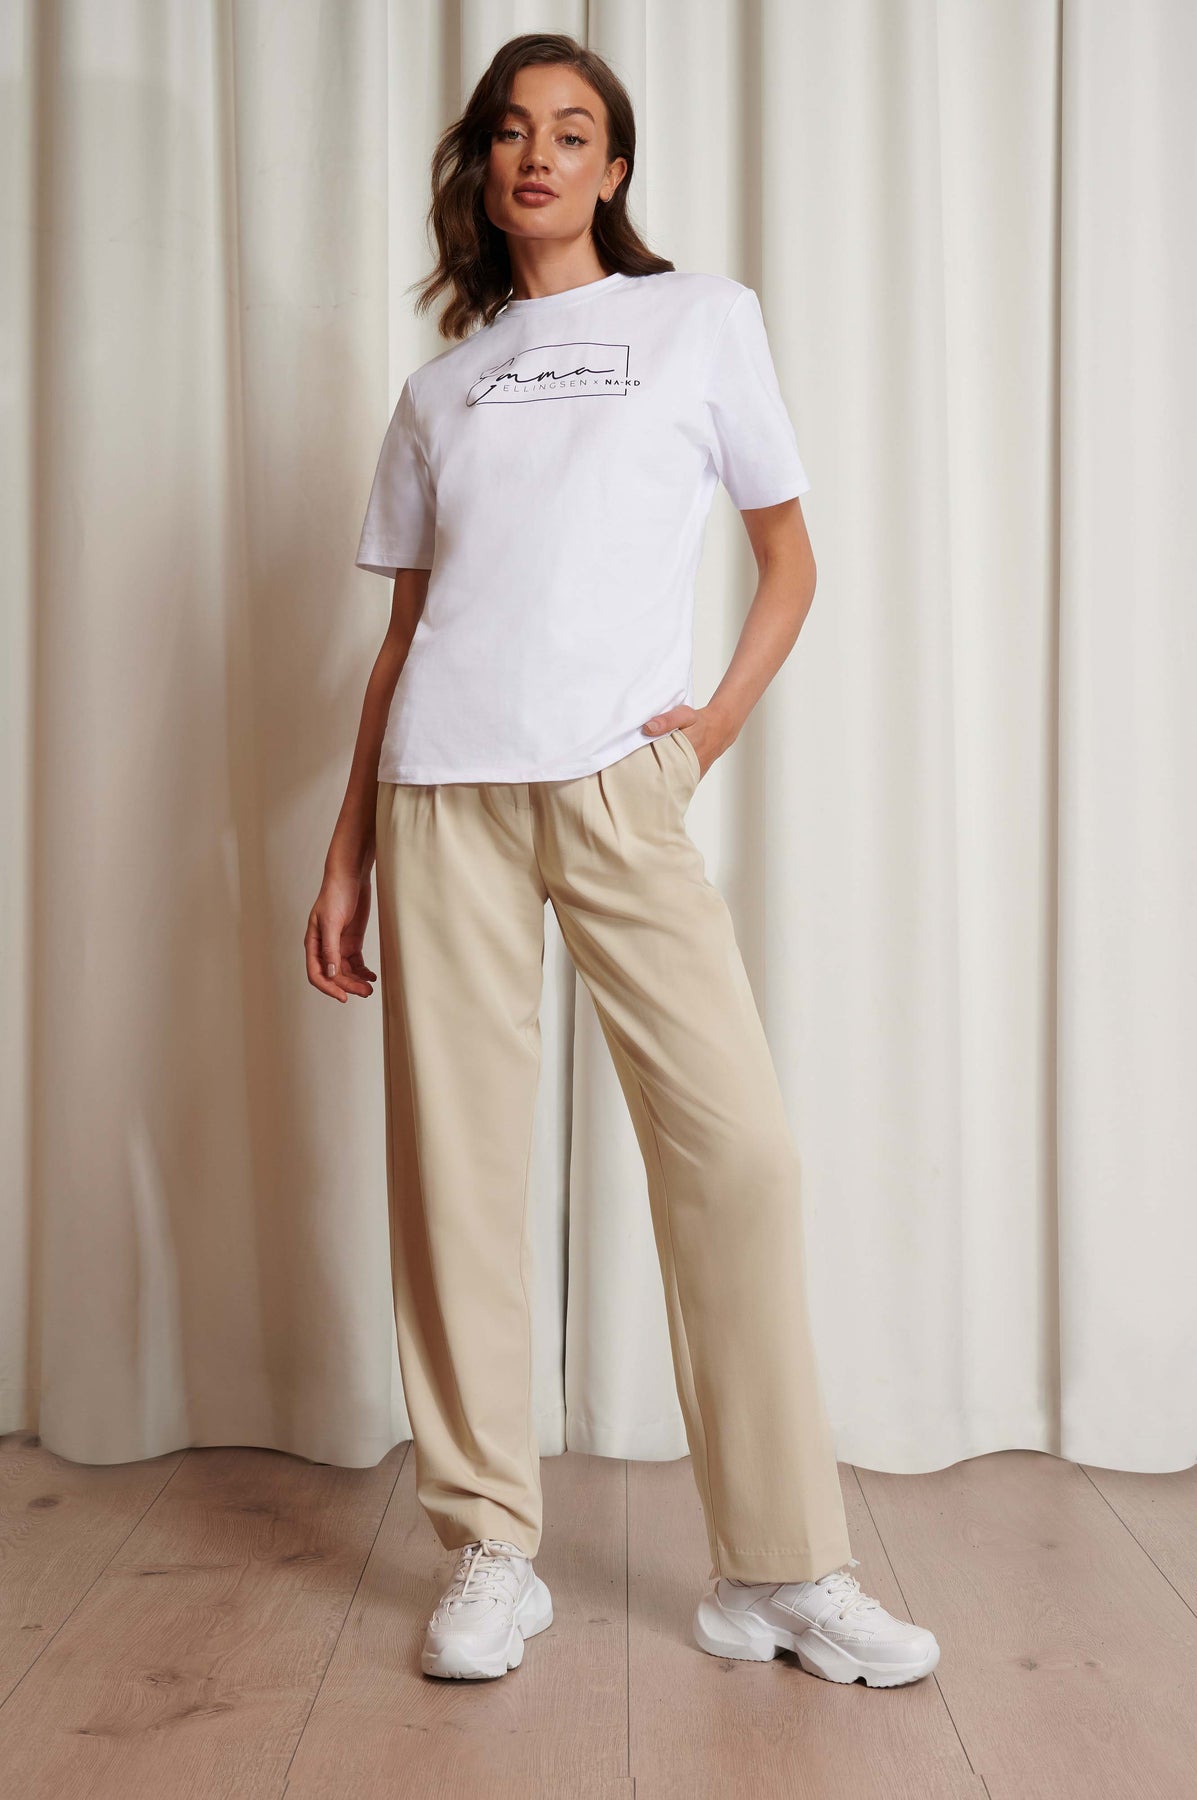 Emma Printed Tee - White - Emma Ellingsen - T-skjorter & Topper - VILLOID.no